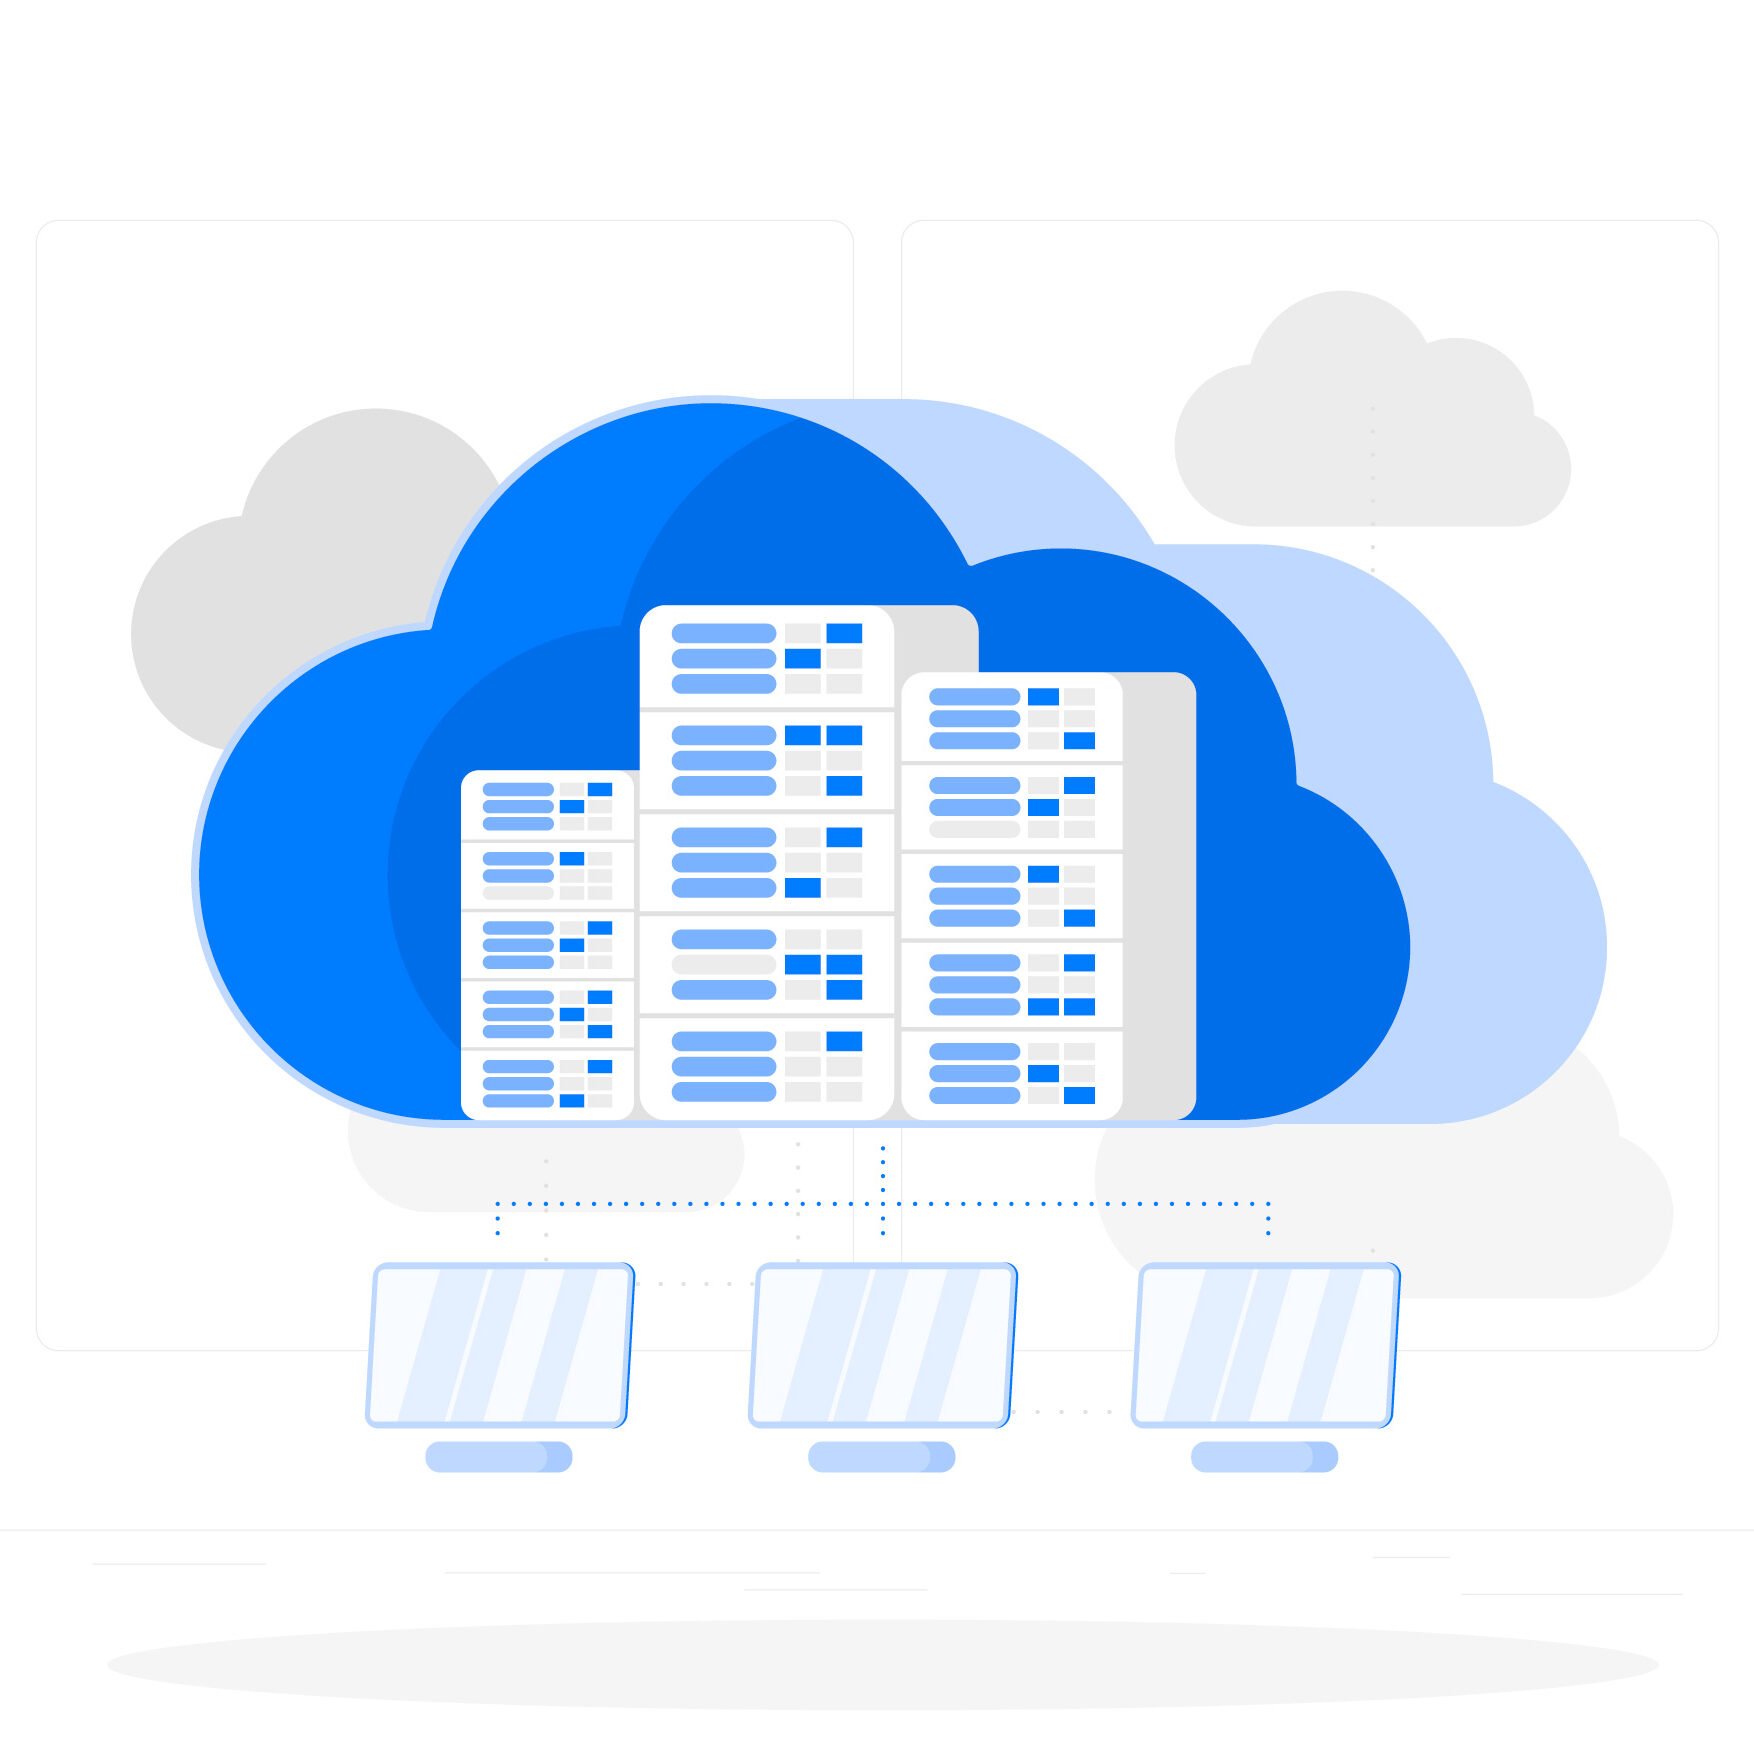 cloud native application